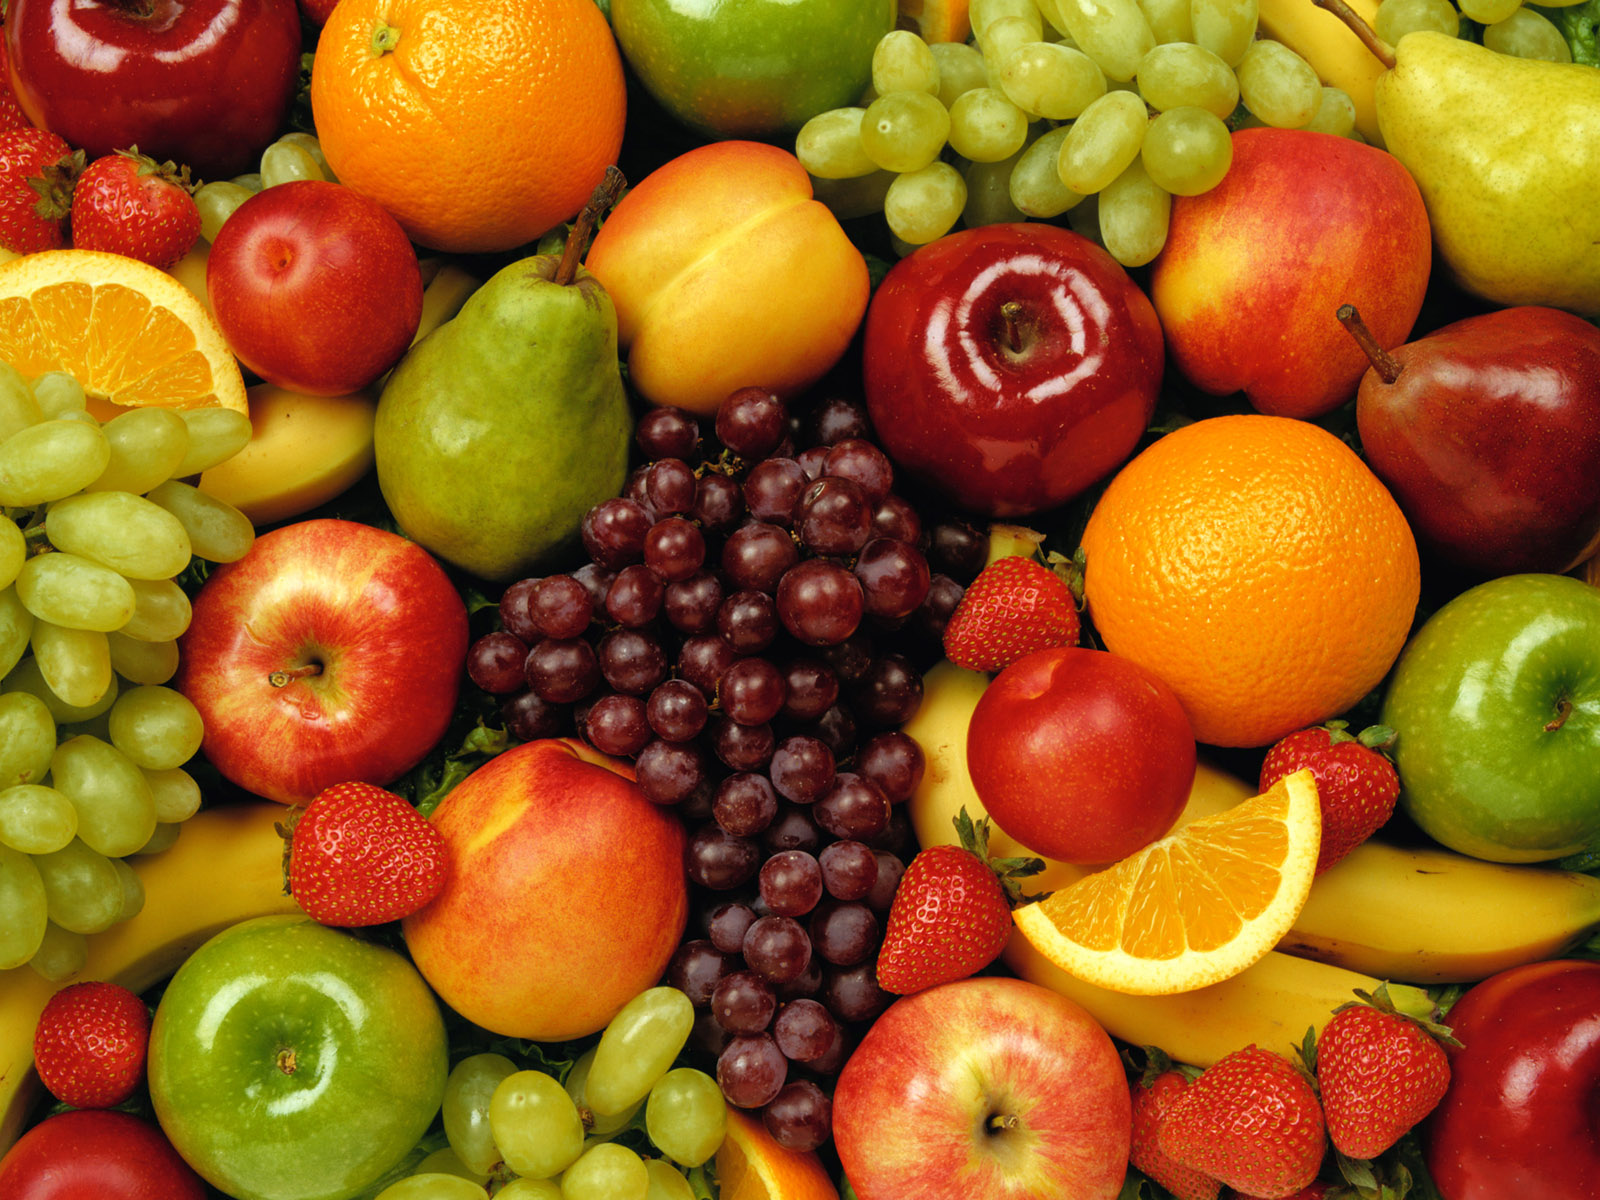 http://3.bp.blogspot.com/-Jy5ipv4DBw8/TdYpVTlNyLI/AAAAAAAAAHI/CVgi4iX6XIg/s1600/Importance+of+Fruits+In+Diet.jpg